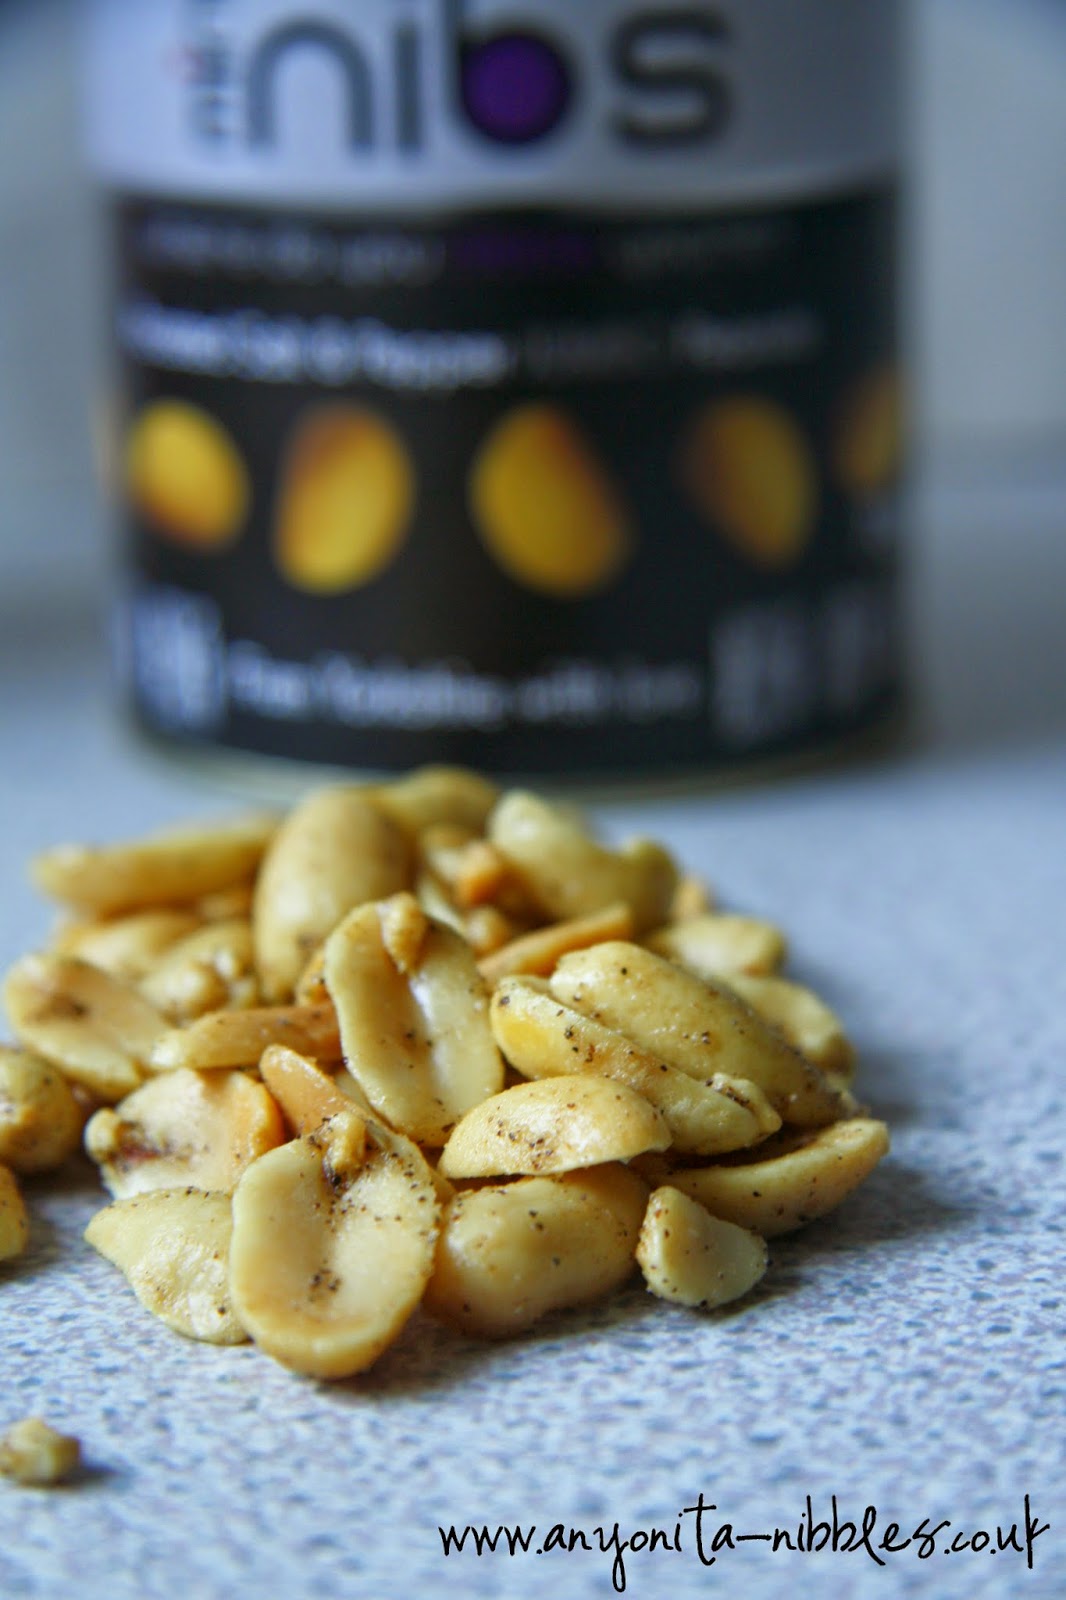 Roasted salt and pepper jumbo peanuts from Mini Nibs | www.anyonita-nibbles.co.uk